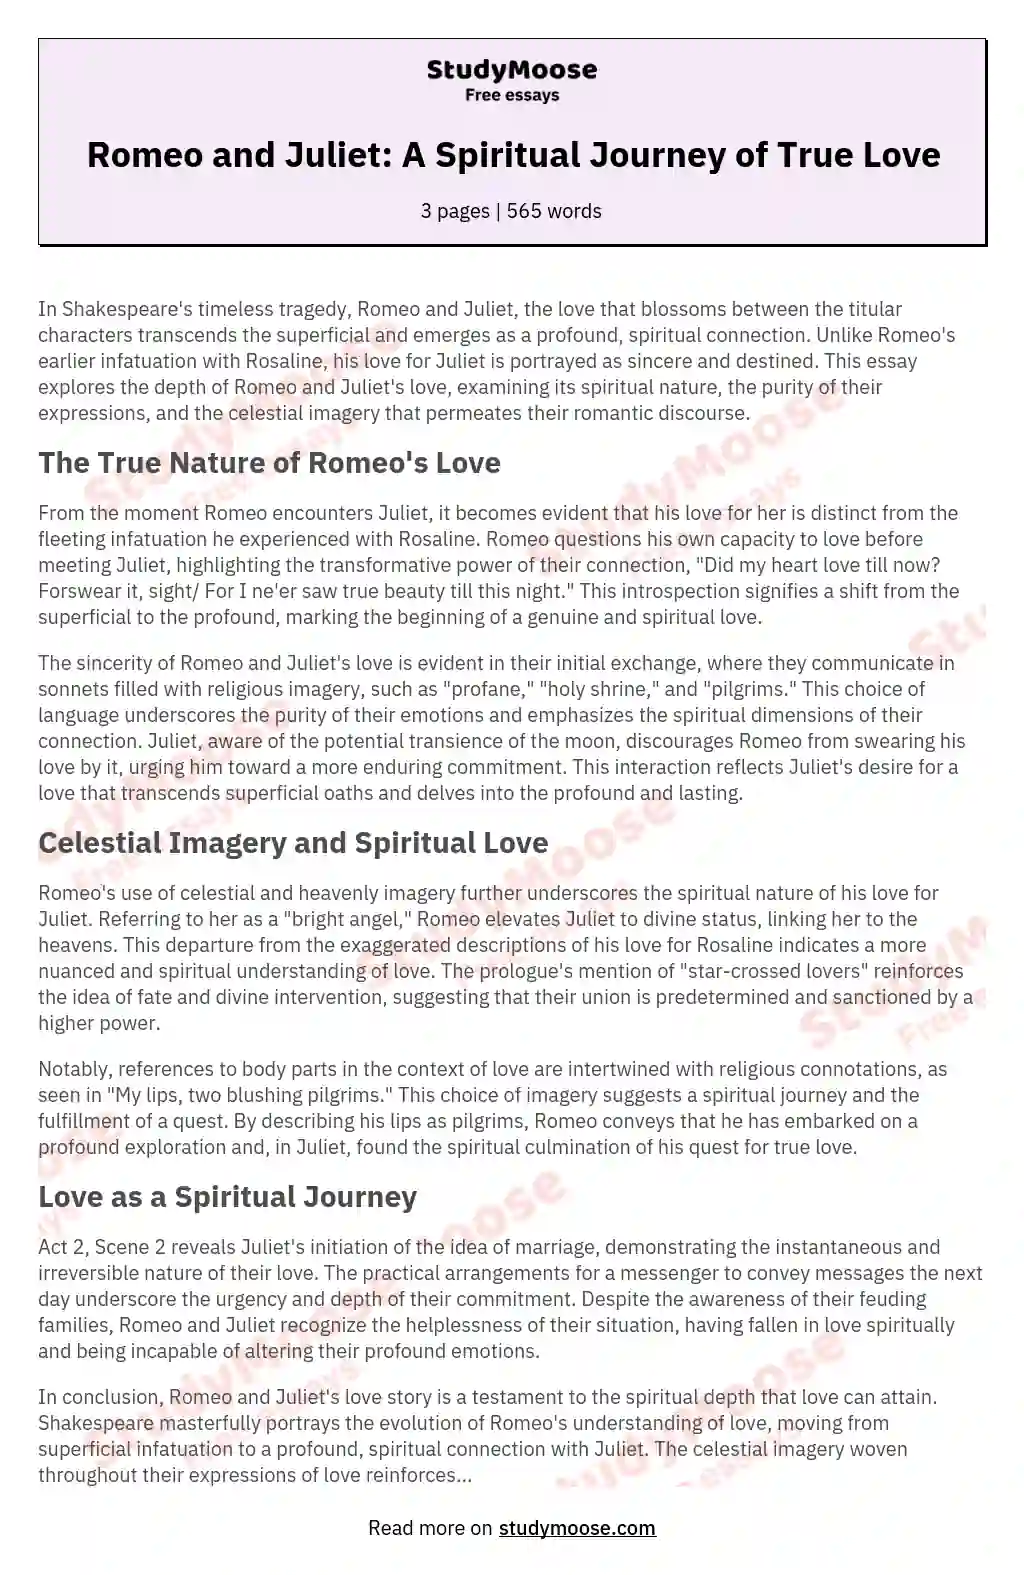 Romeo and Juliet: A Spiritual Journey of True Love essay